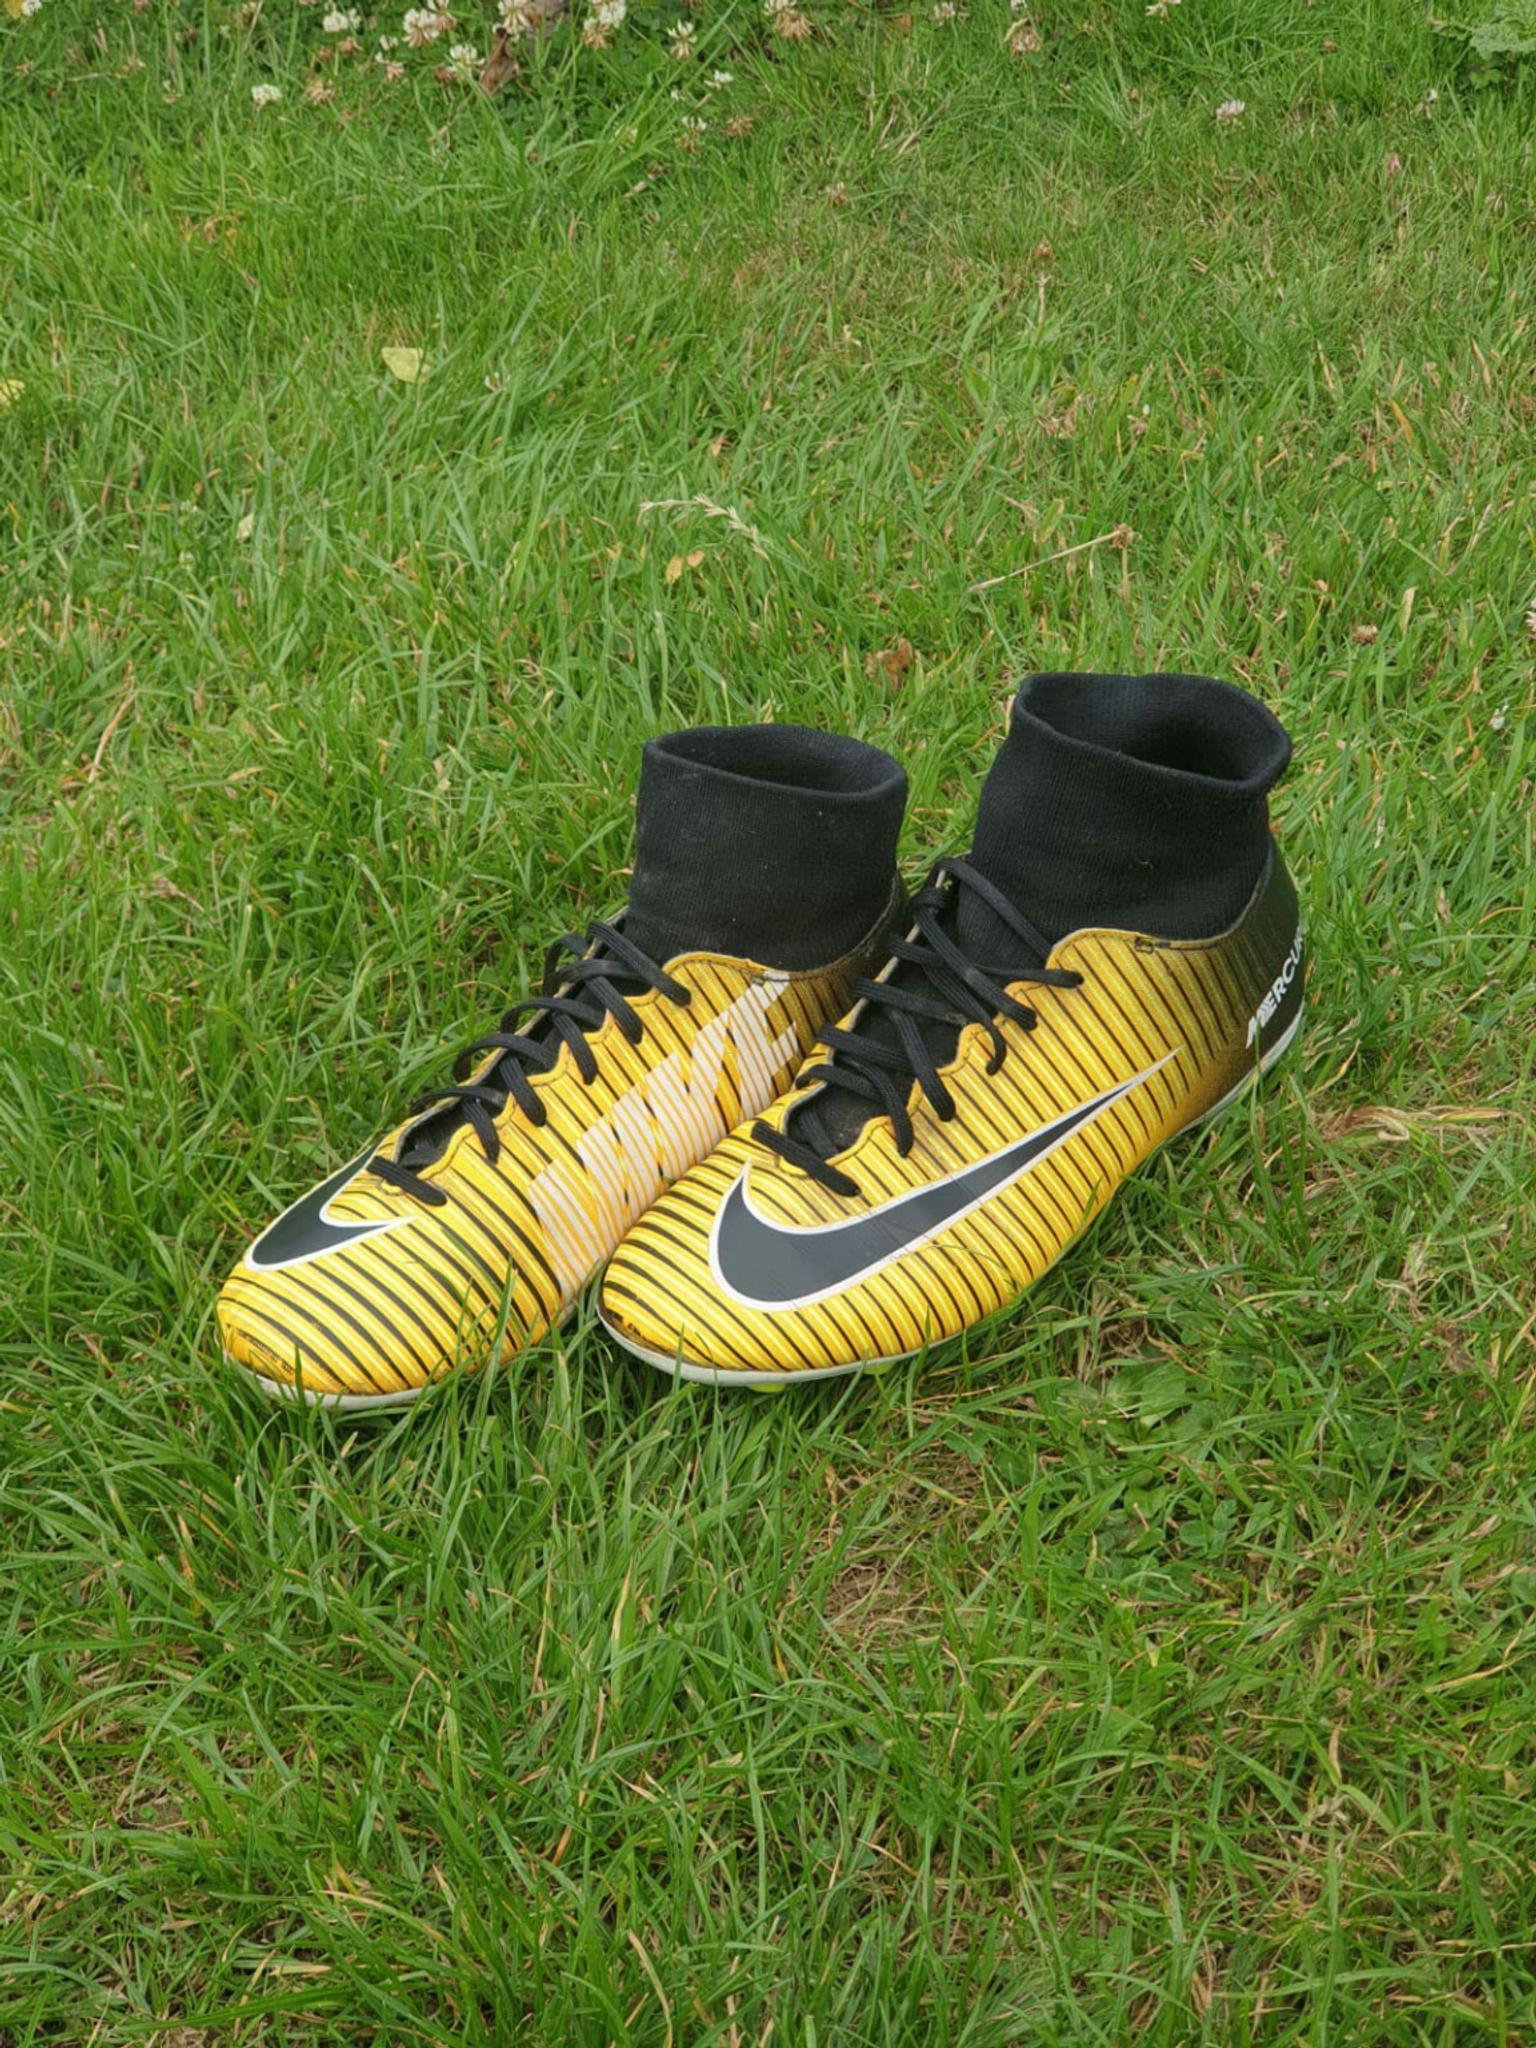 very boys football boots